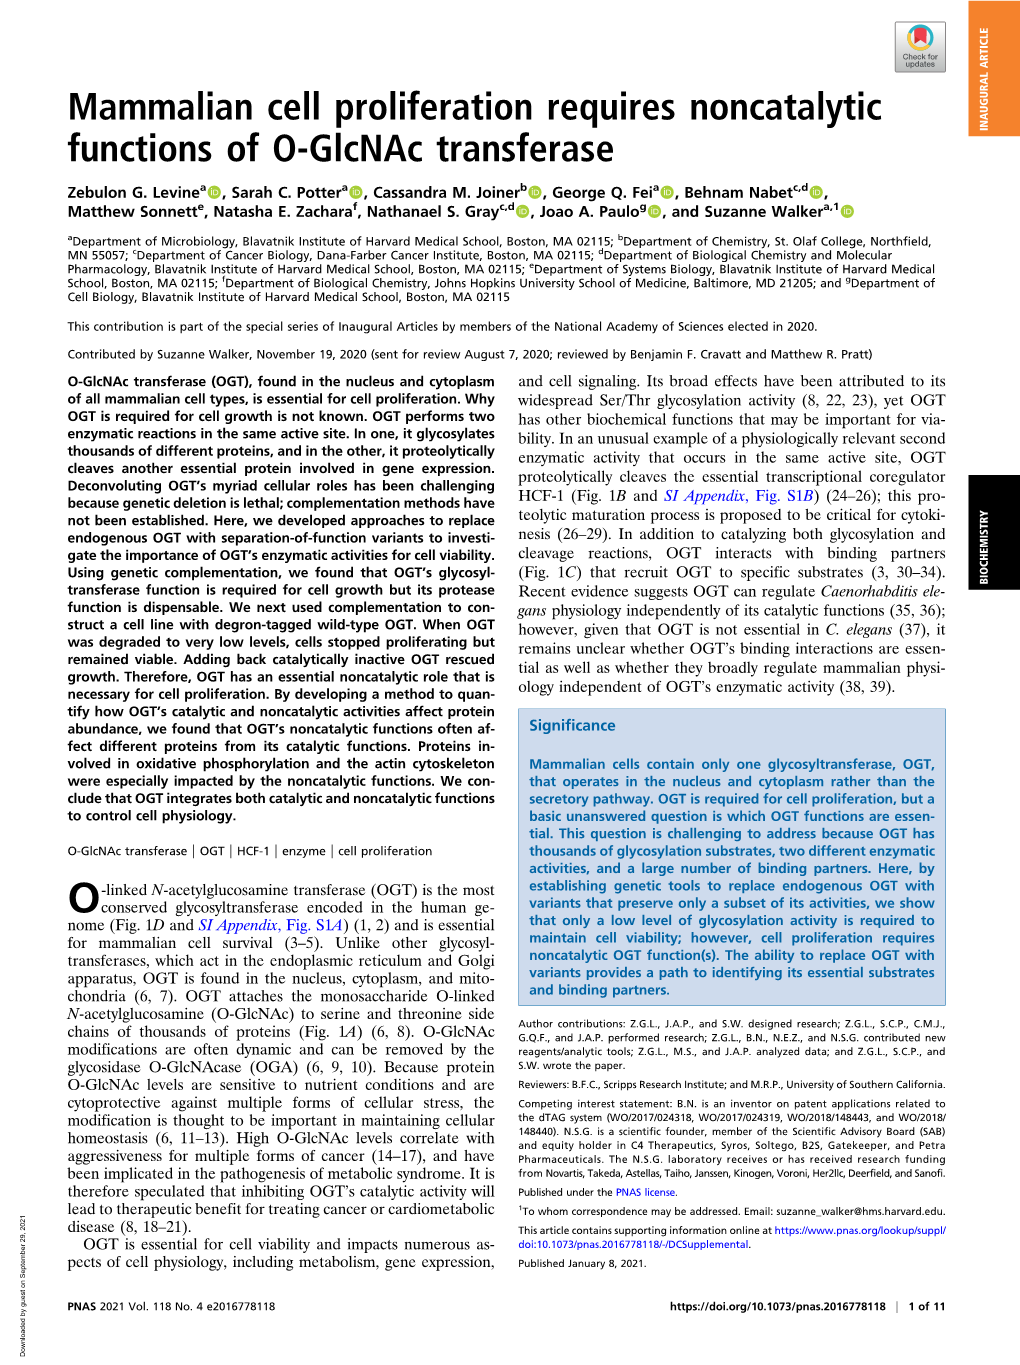 Mammalian Cell Proliferation Requires Noncatalytic Functions of O-Glcnac Transferase INAUGURAL ARTICLE